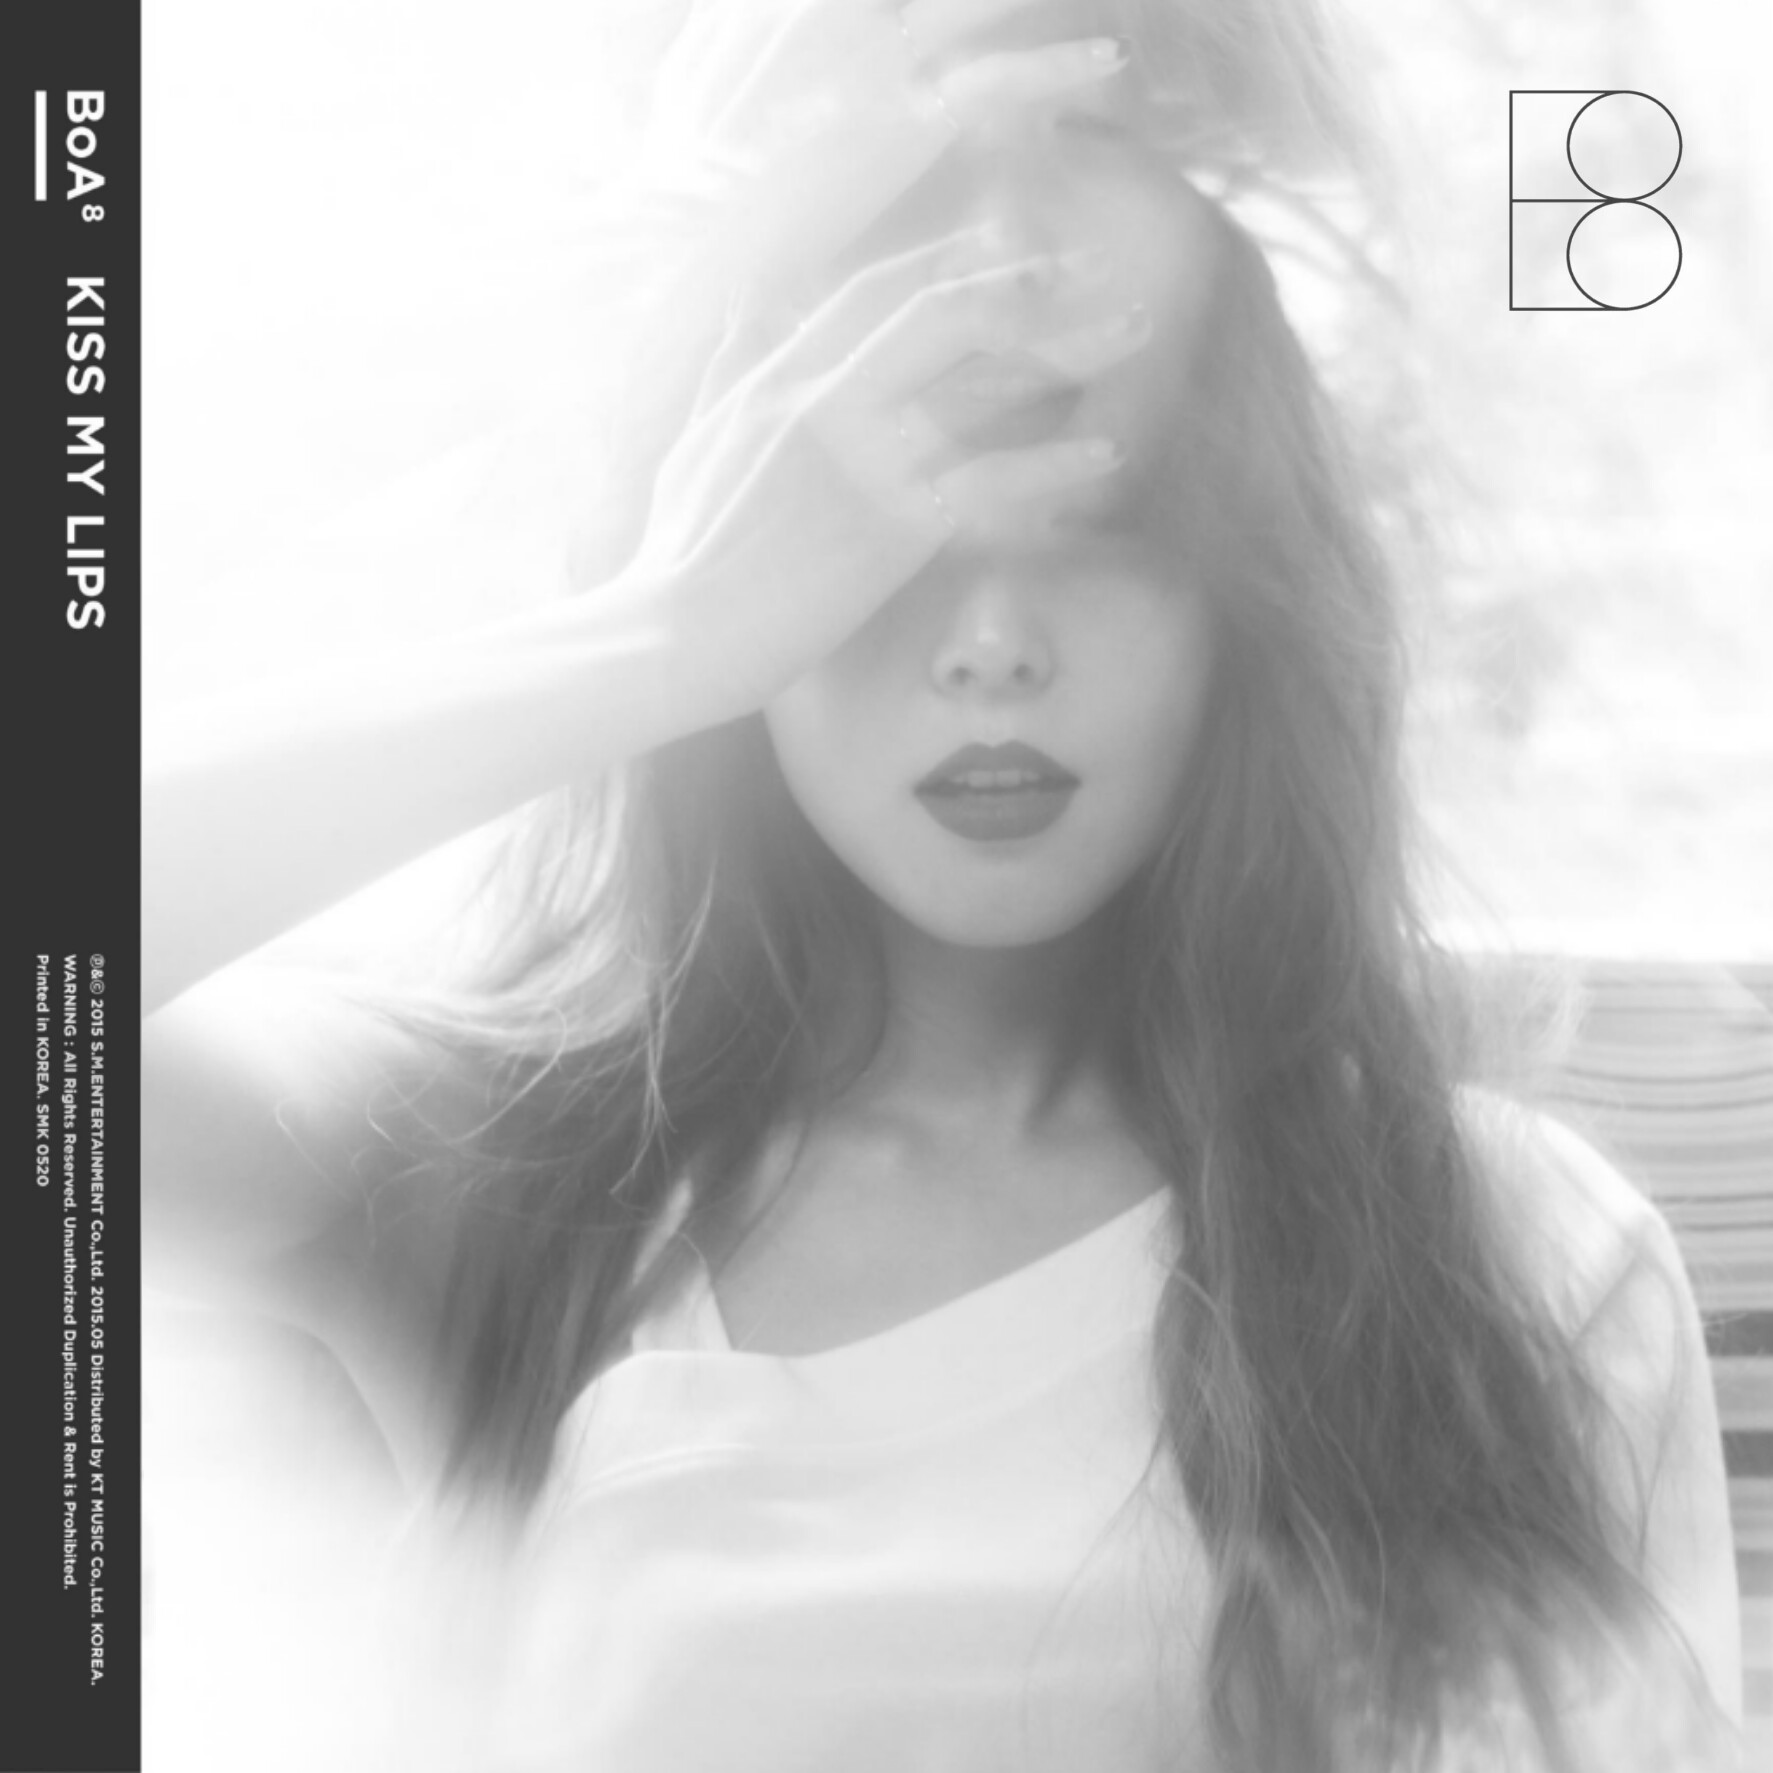 BOA KISS MY LIPS / 8TH ALBUM album cover #1 by LEAlbum on DeviantArt